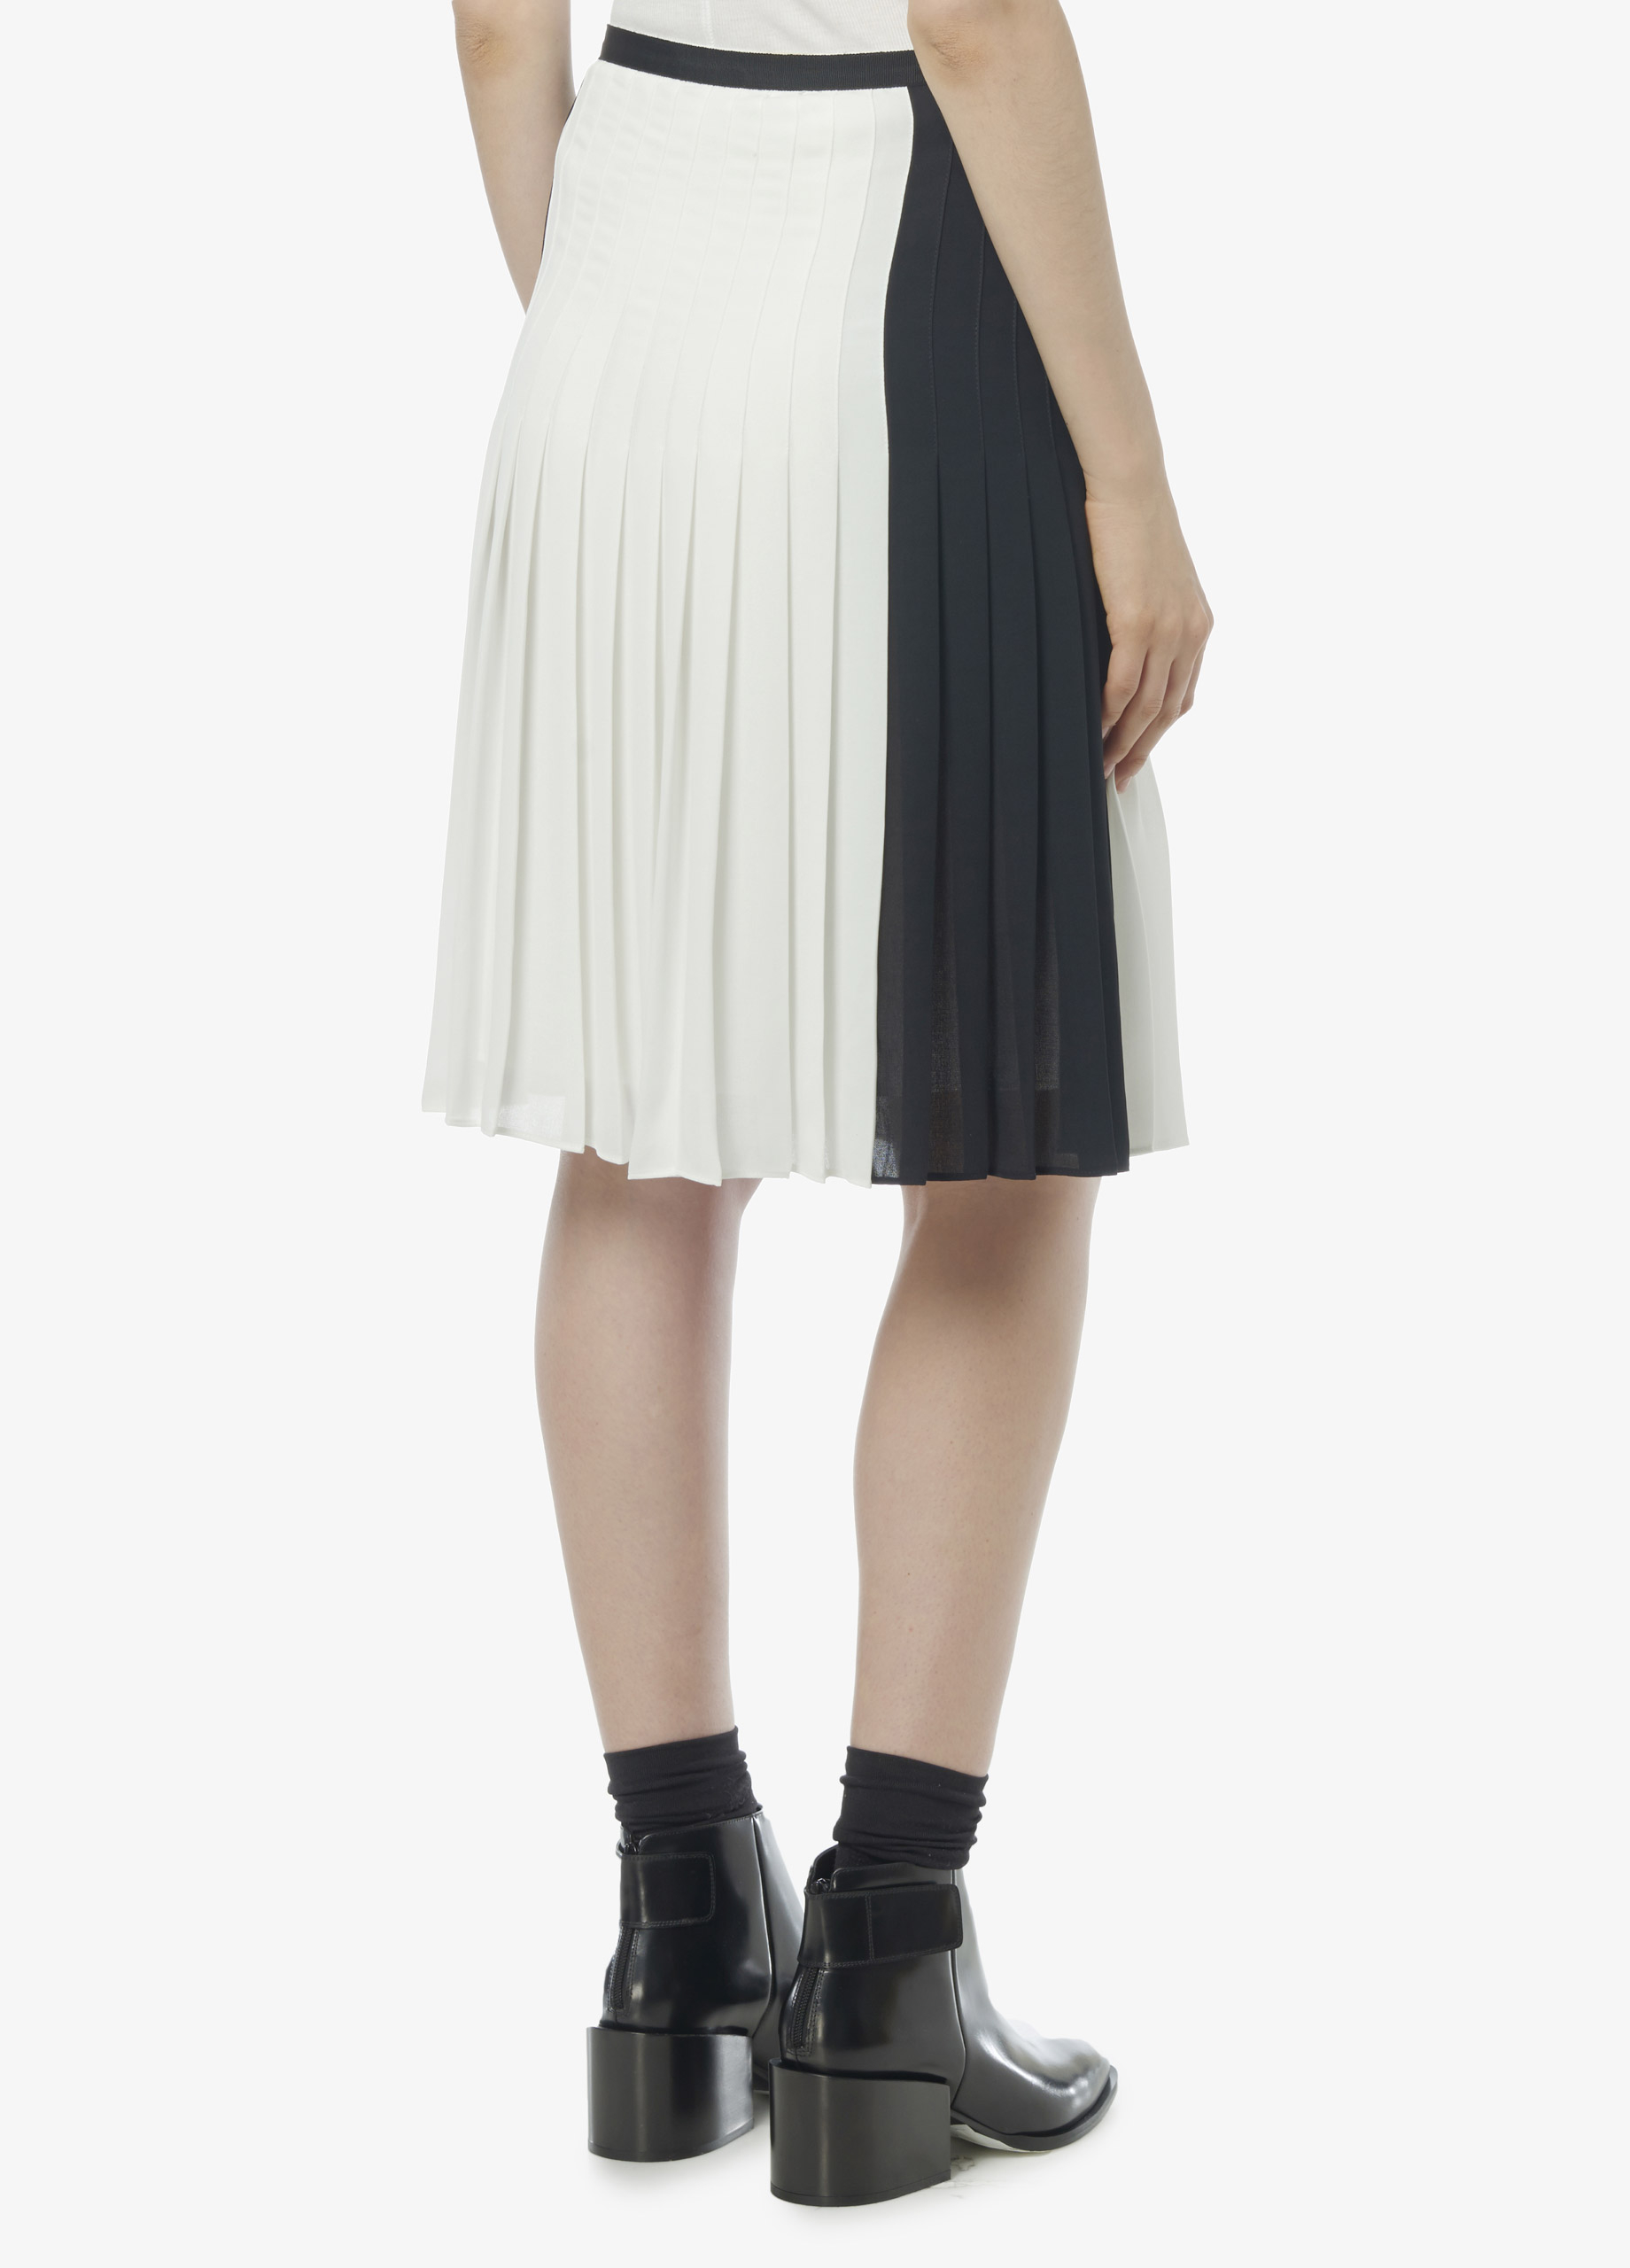 Lyst - Vince Colorblock Pleated Knee-Length Skirt in Black